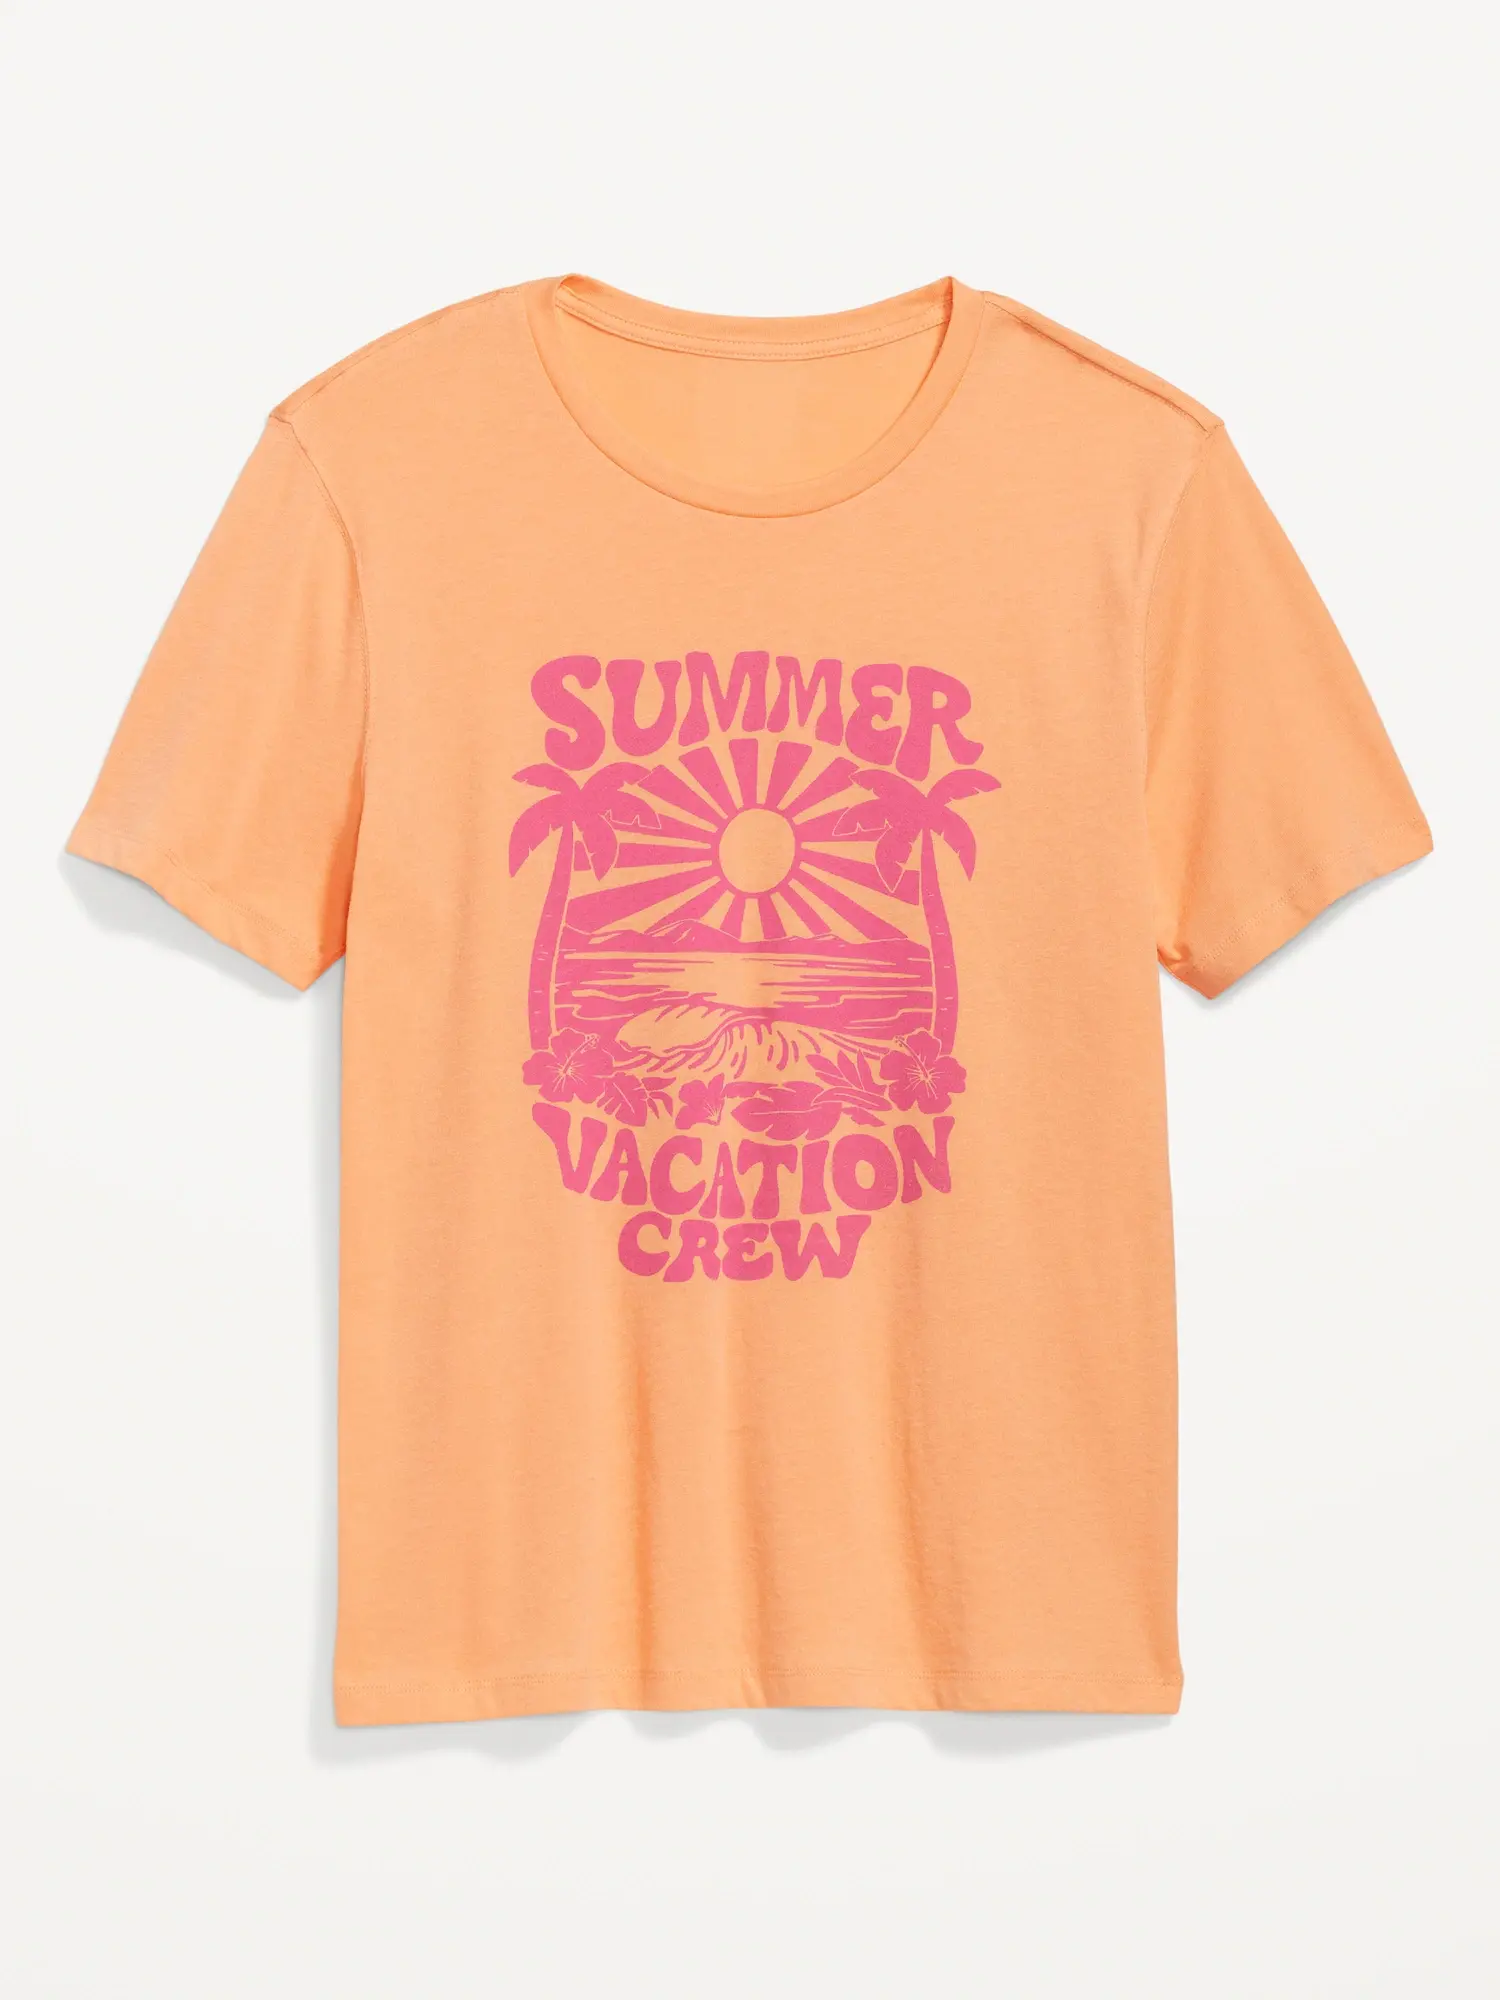 Old Navy Matching Graphic T-Shirt for Men orange. 1